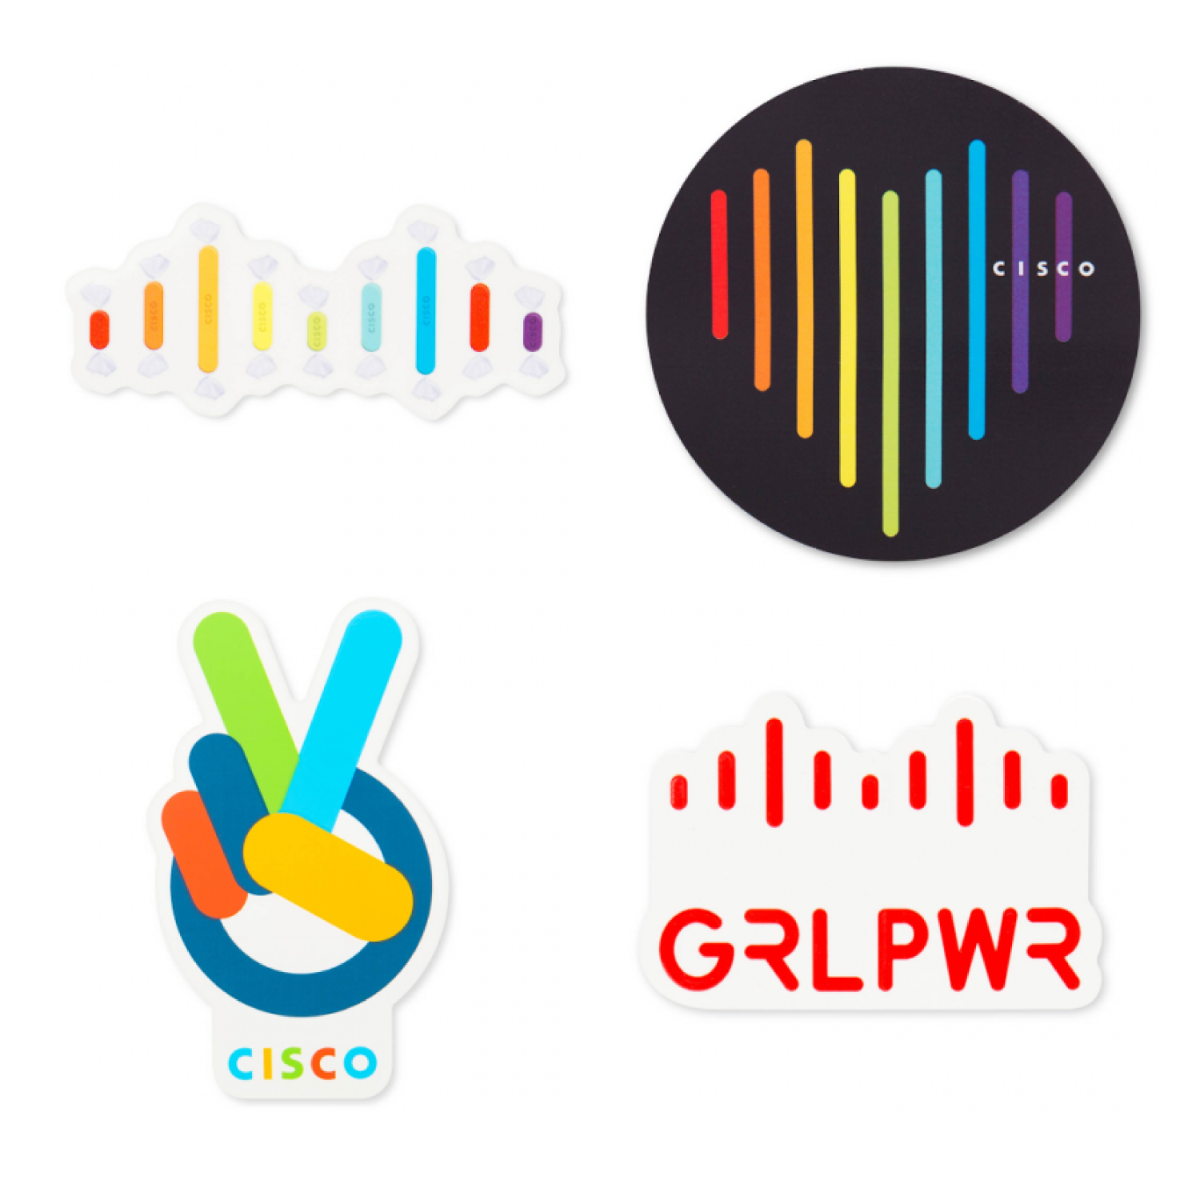 Cisco Store stickers